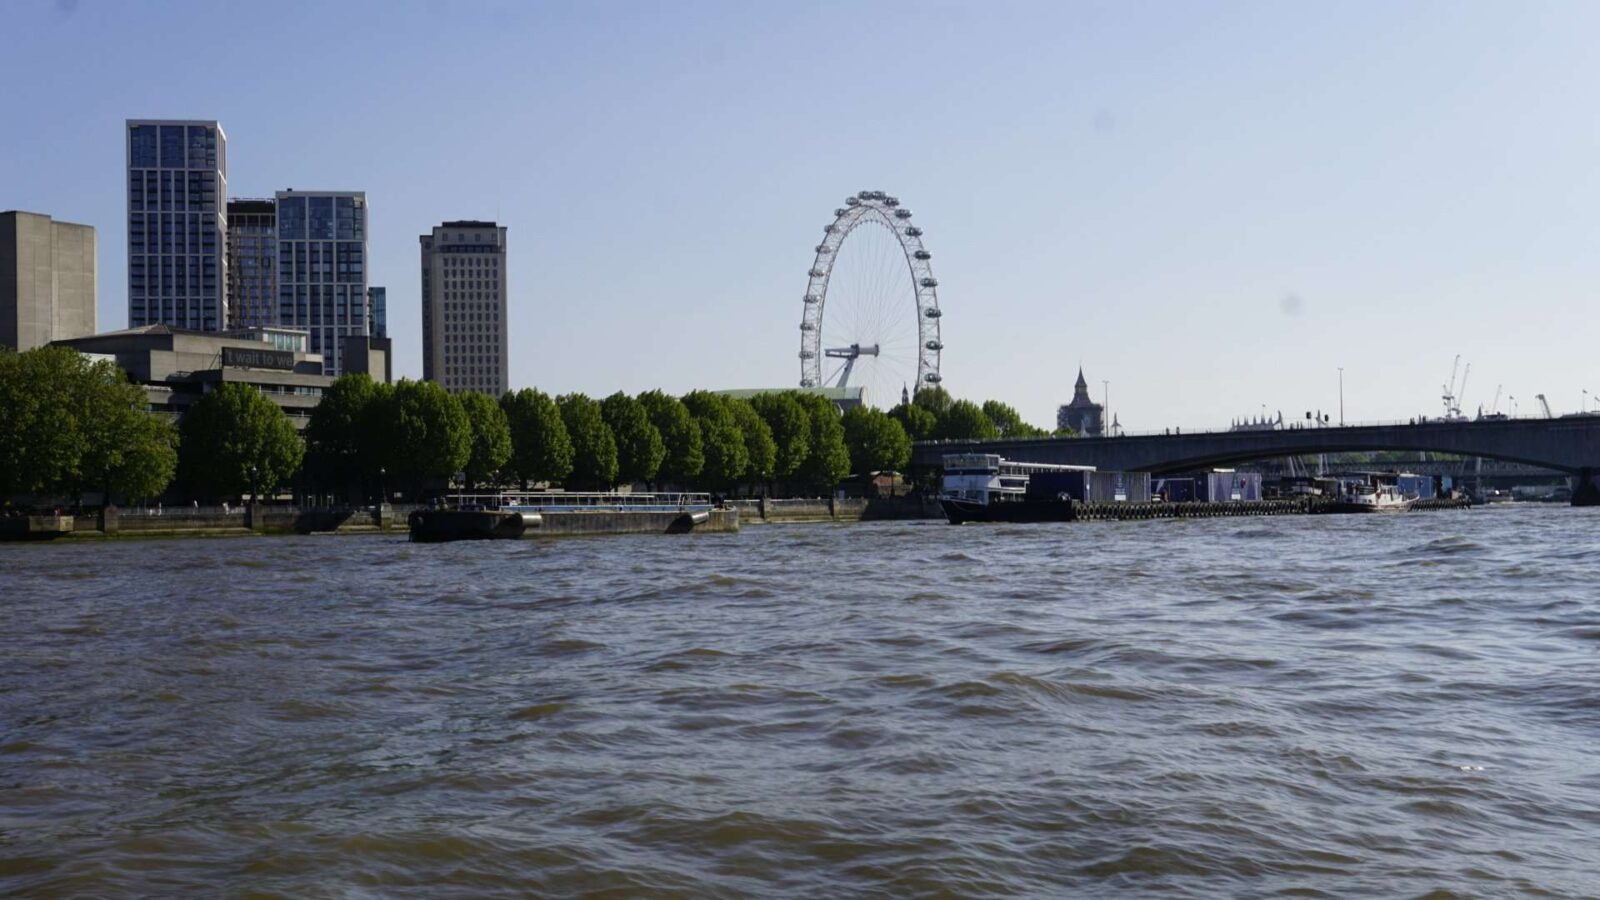 Views of iconic London landmarks